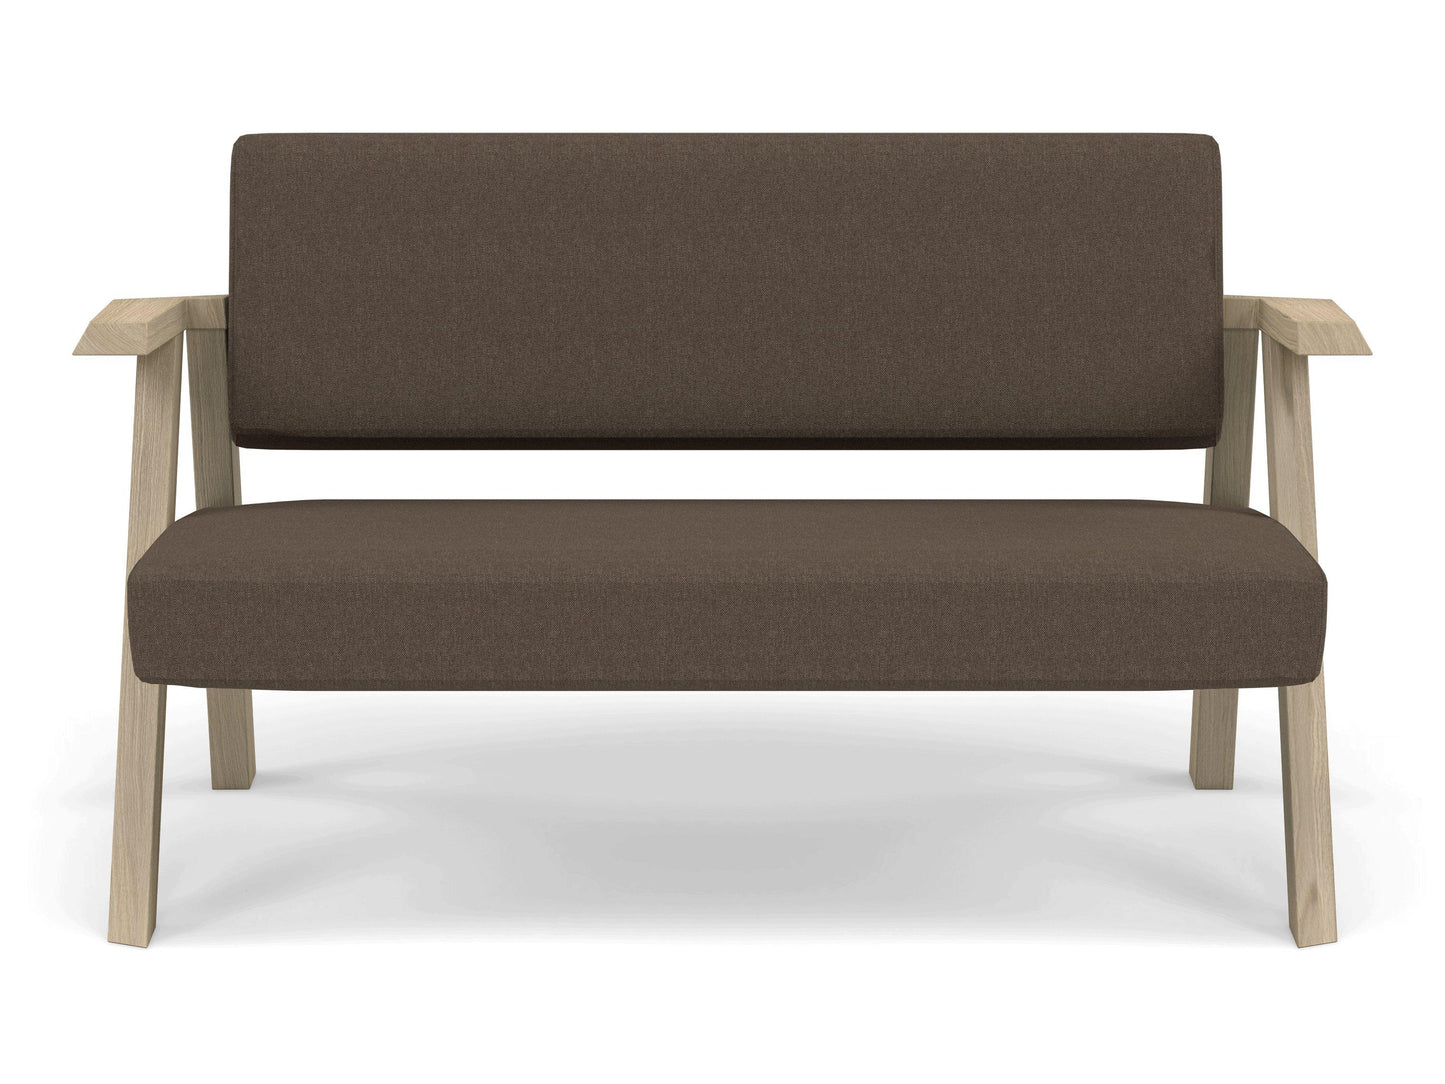 Classic Mid-century Design 2 Seater Sofa Armchair in Coffee Brown Fabric-Natural Oak-Distinct Designs (London) Ltd